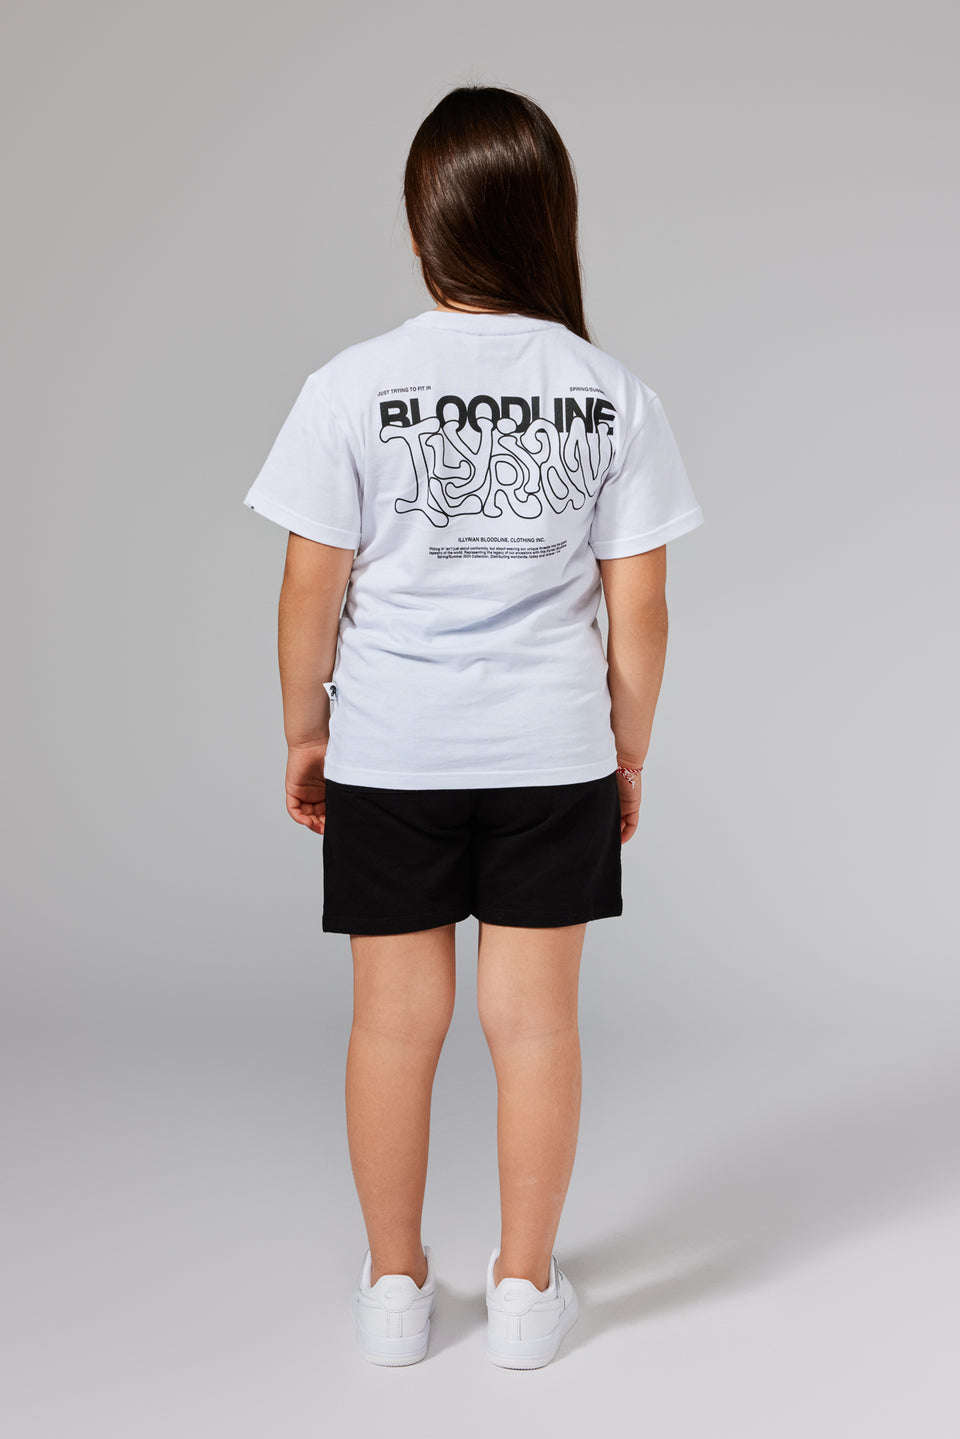 IBL Wavy T-shirt Kids - White